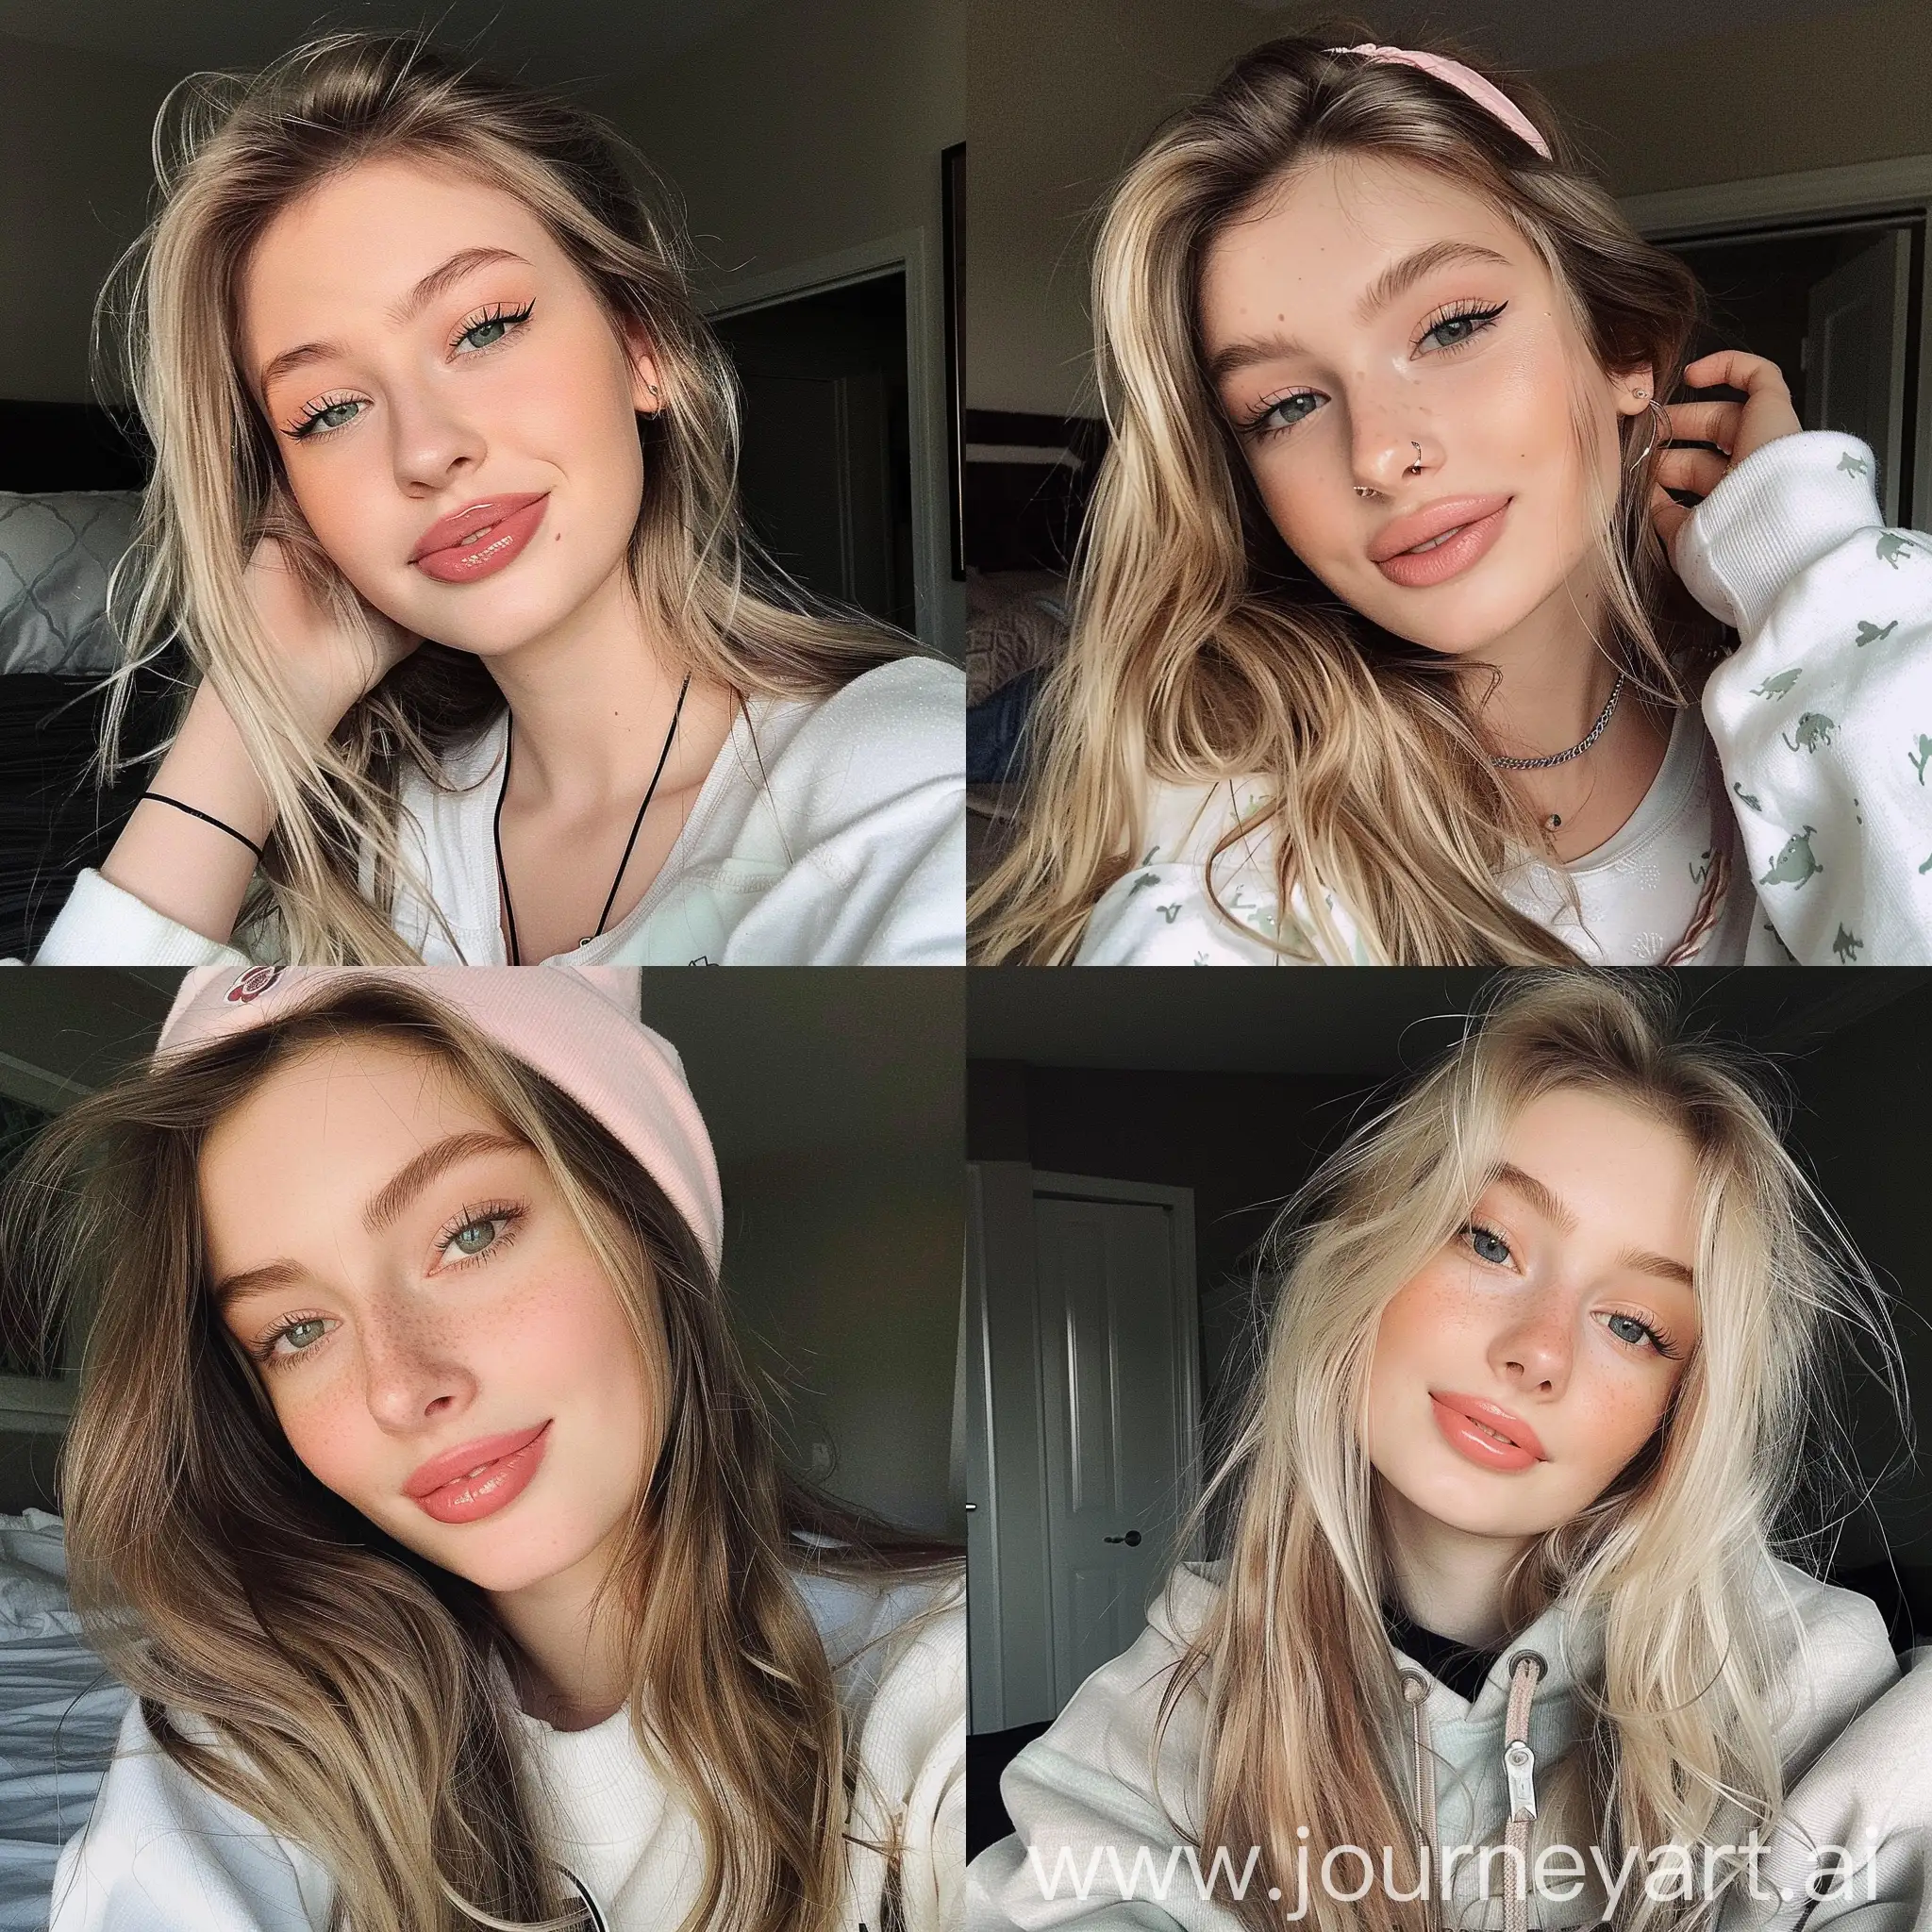 Aesthetic Instagram selfie of a teenage girl influencer 